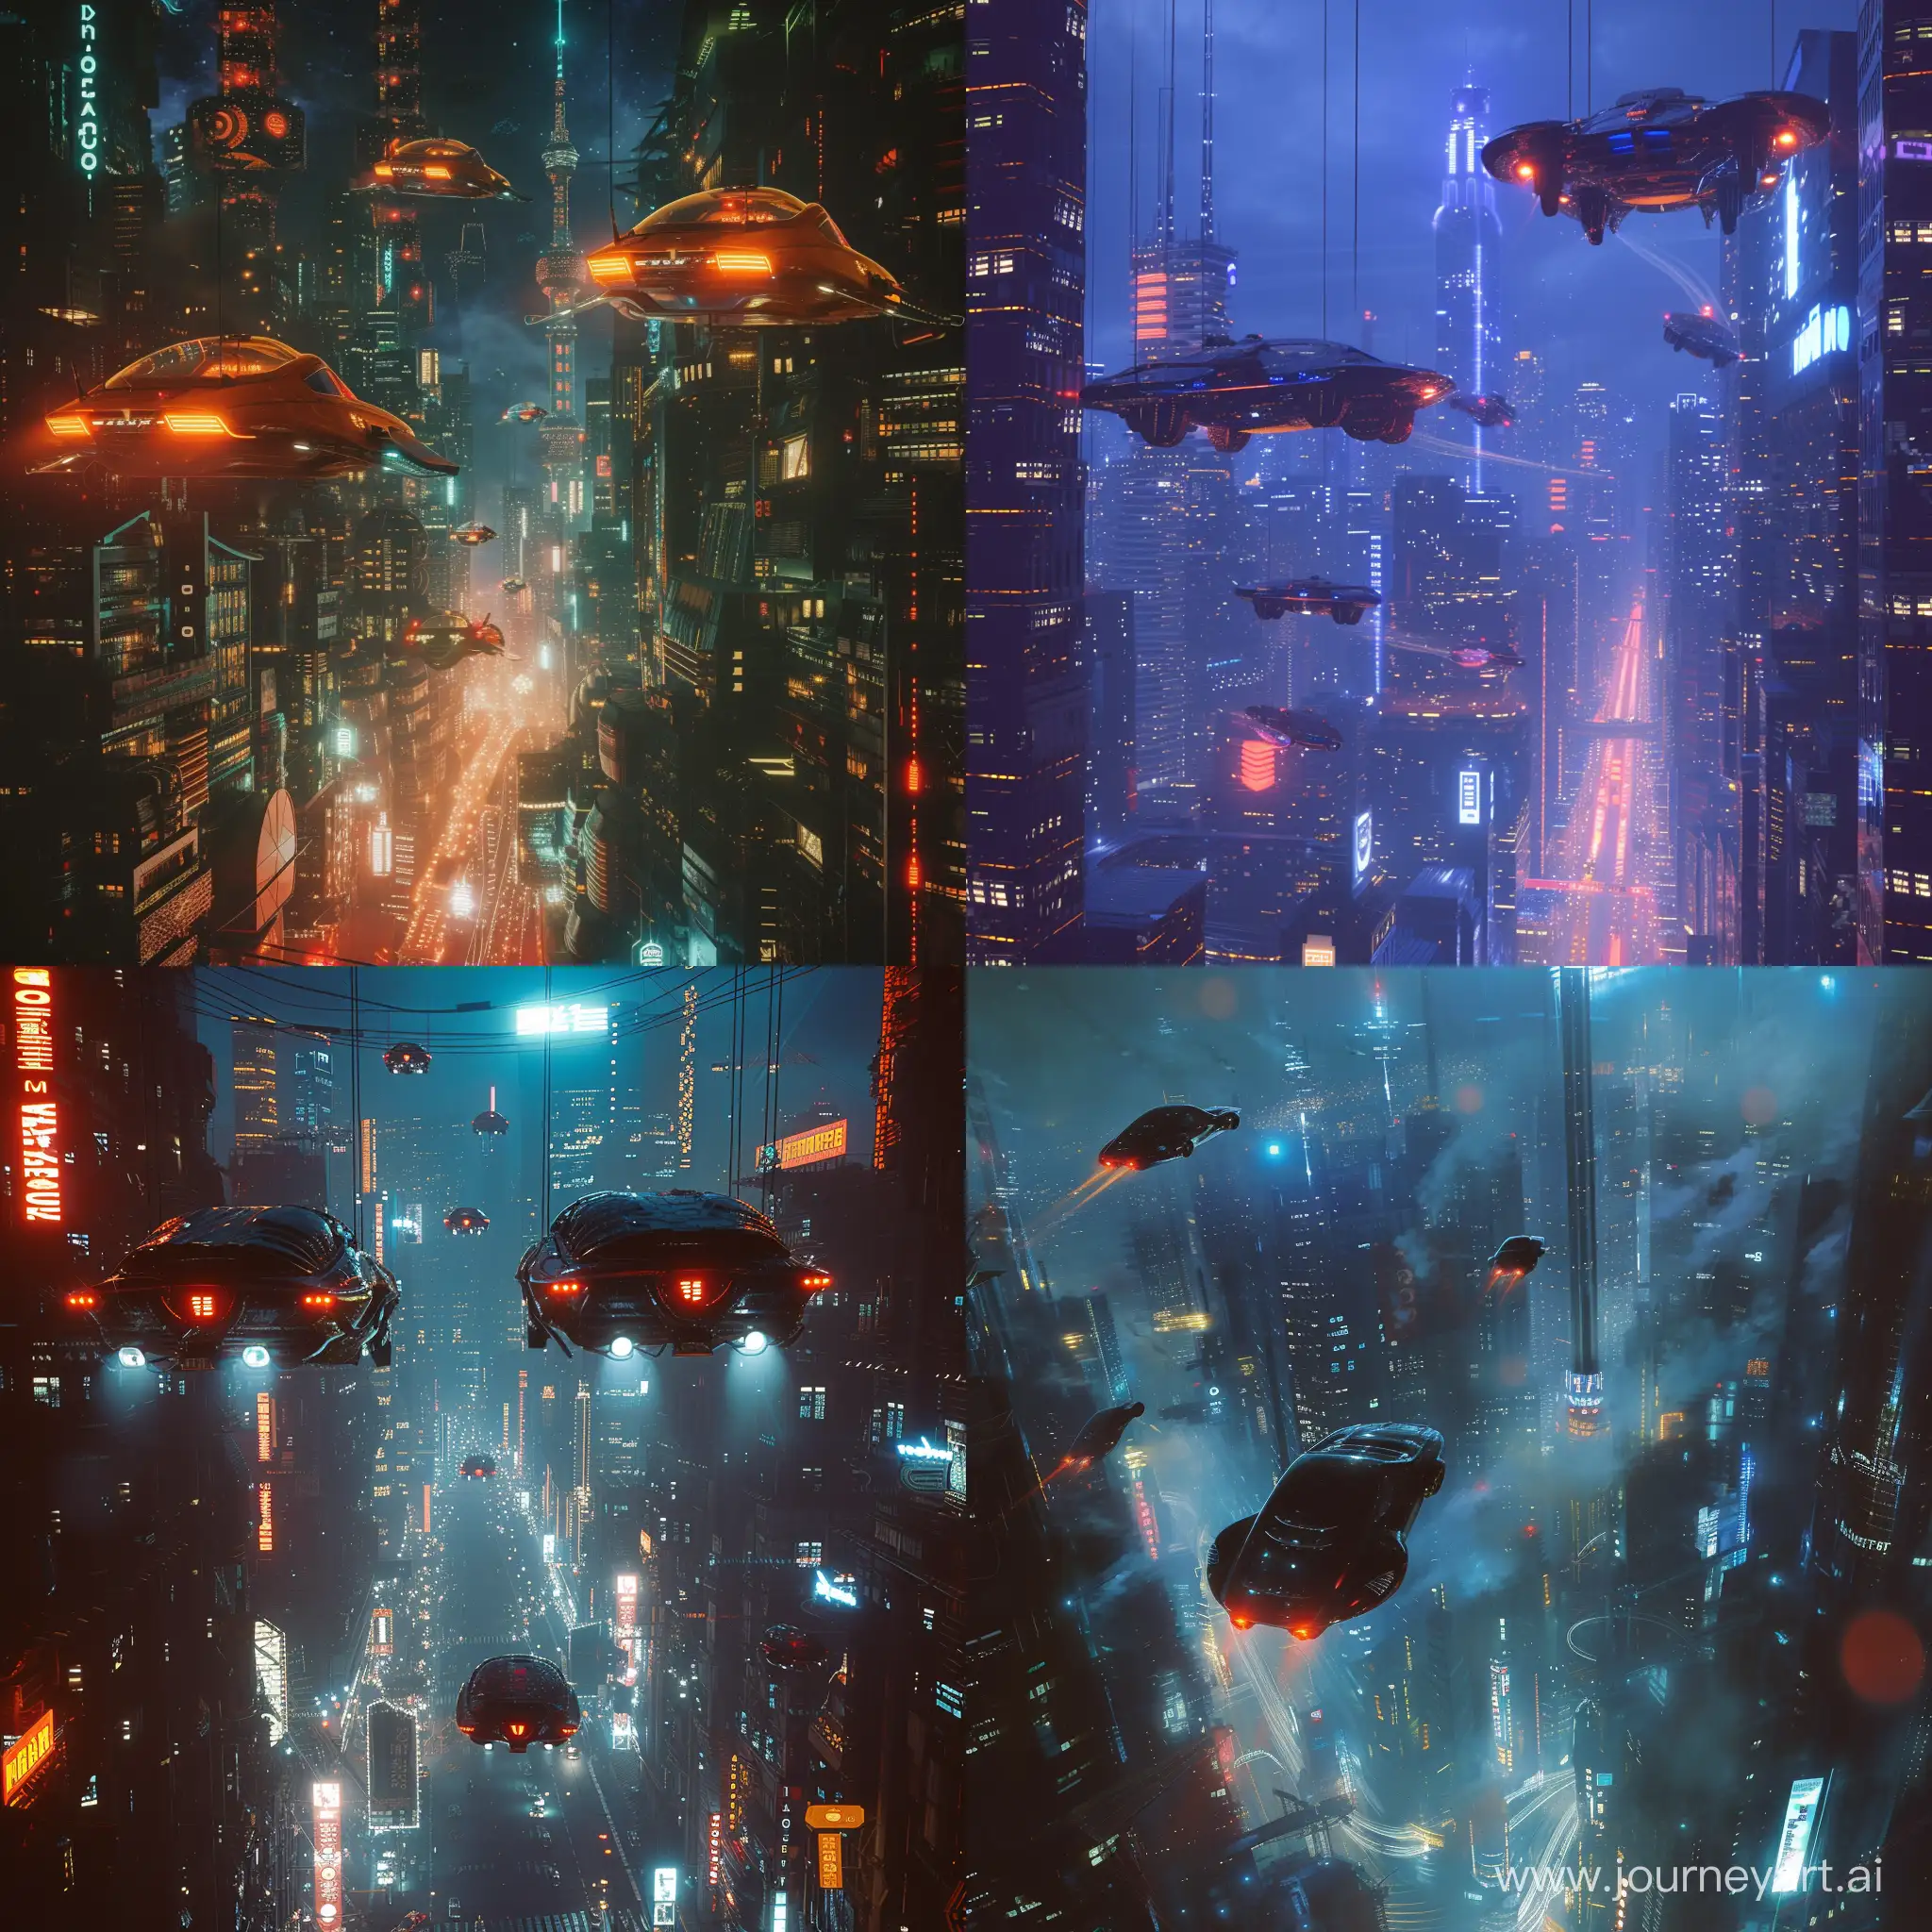 Night city in cyberpunk style, flying cars